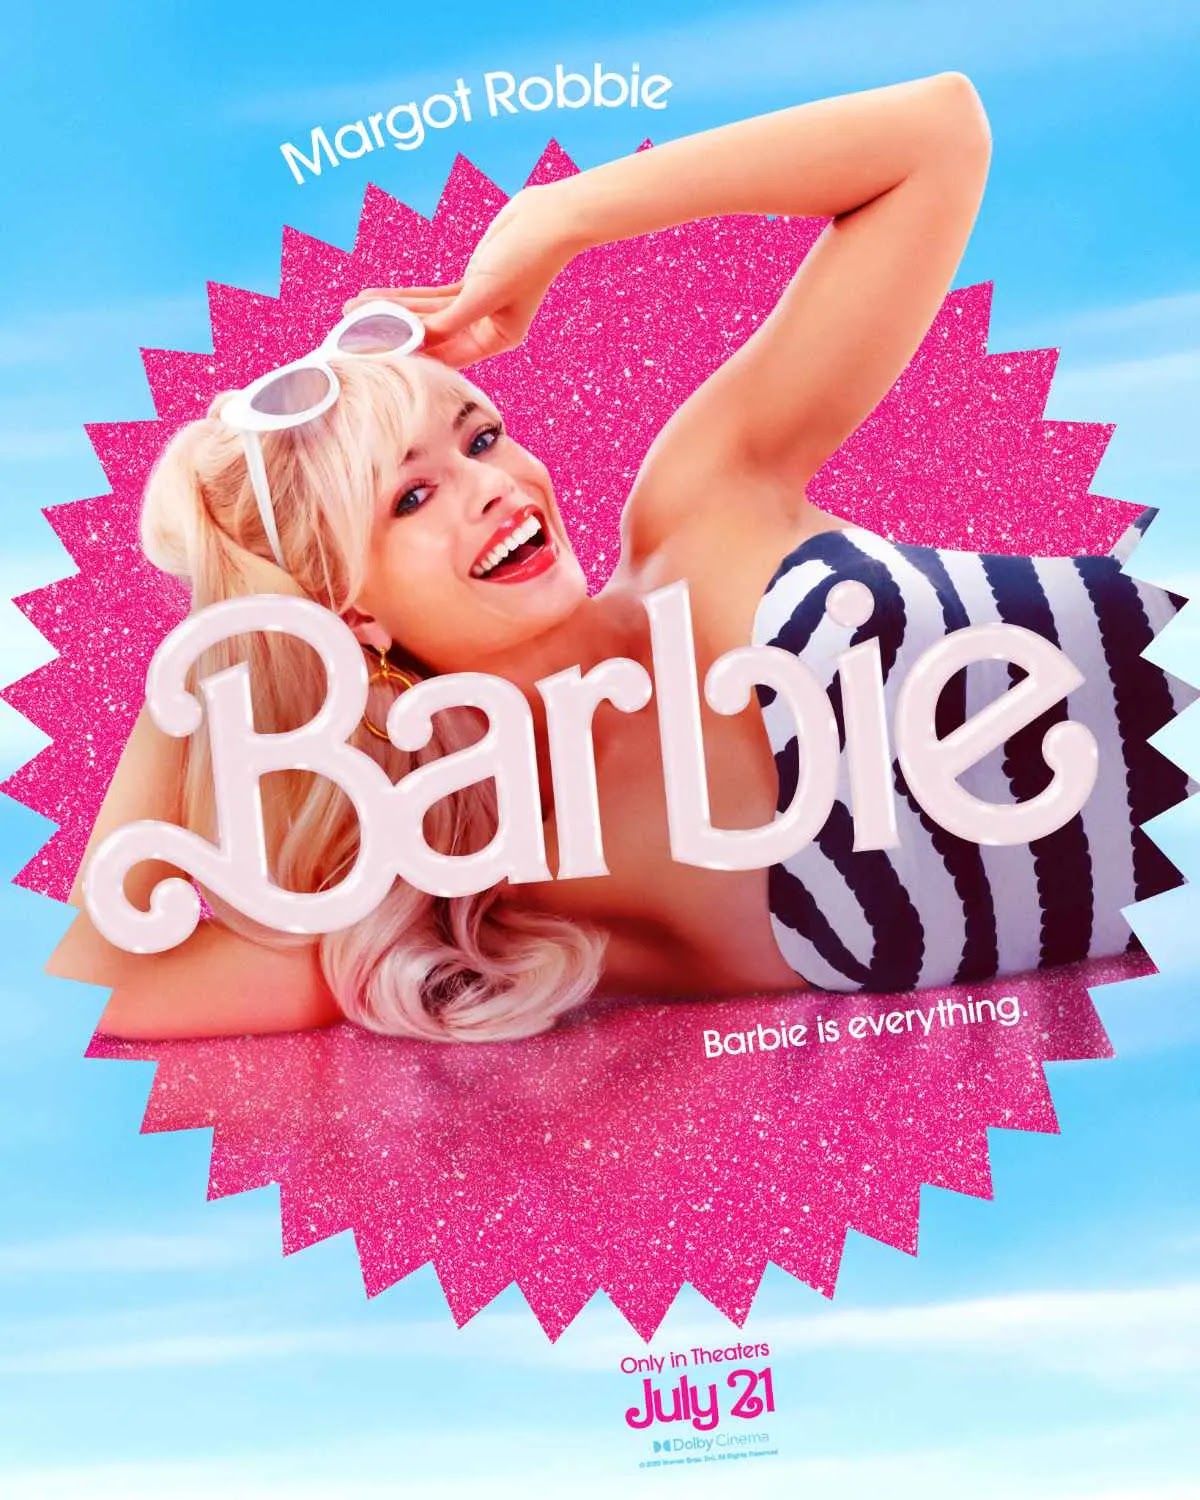 Barbie to overtake Harry Potter 8 as Warner Bros' highest-grossing film